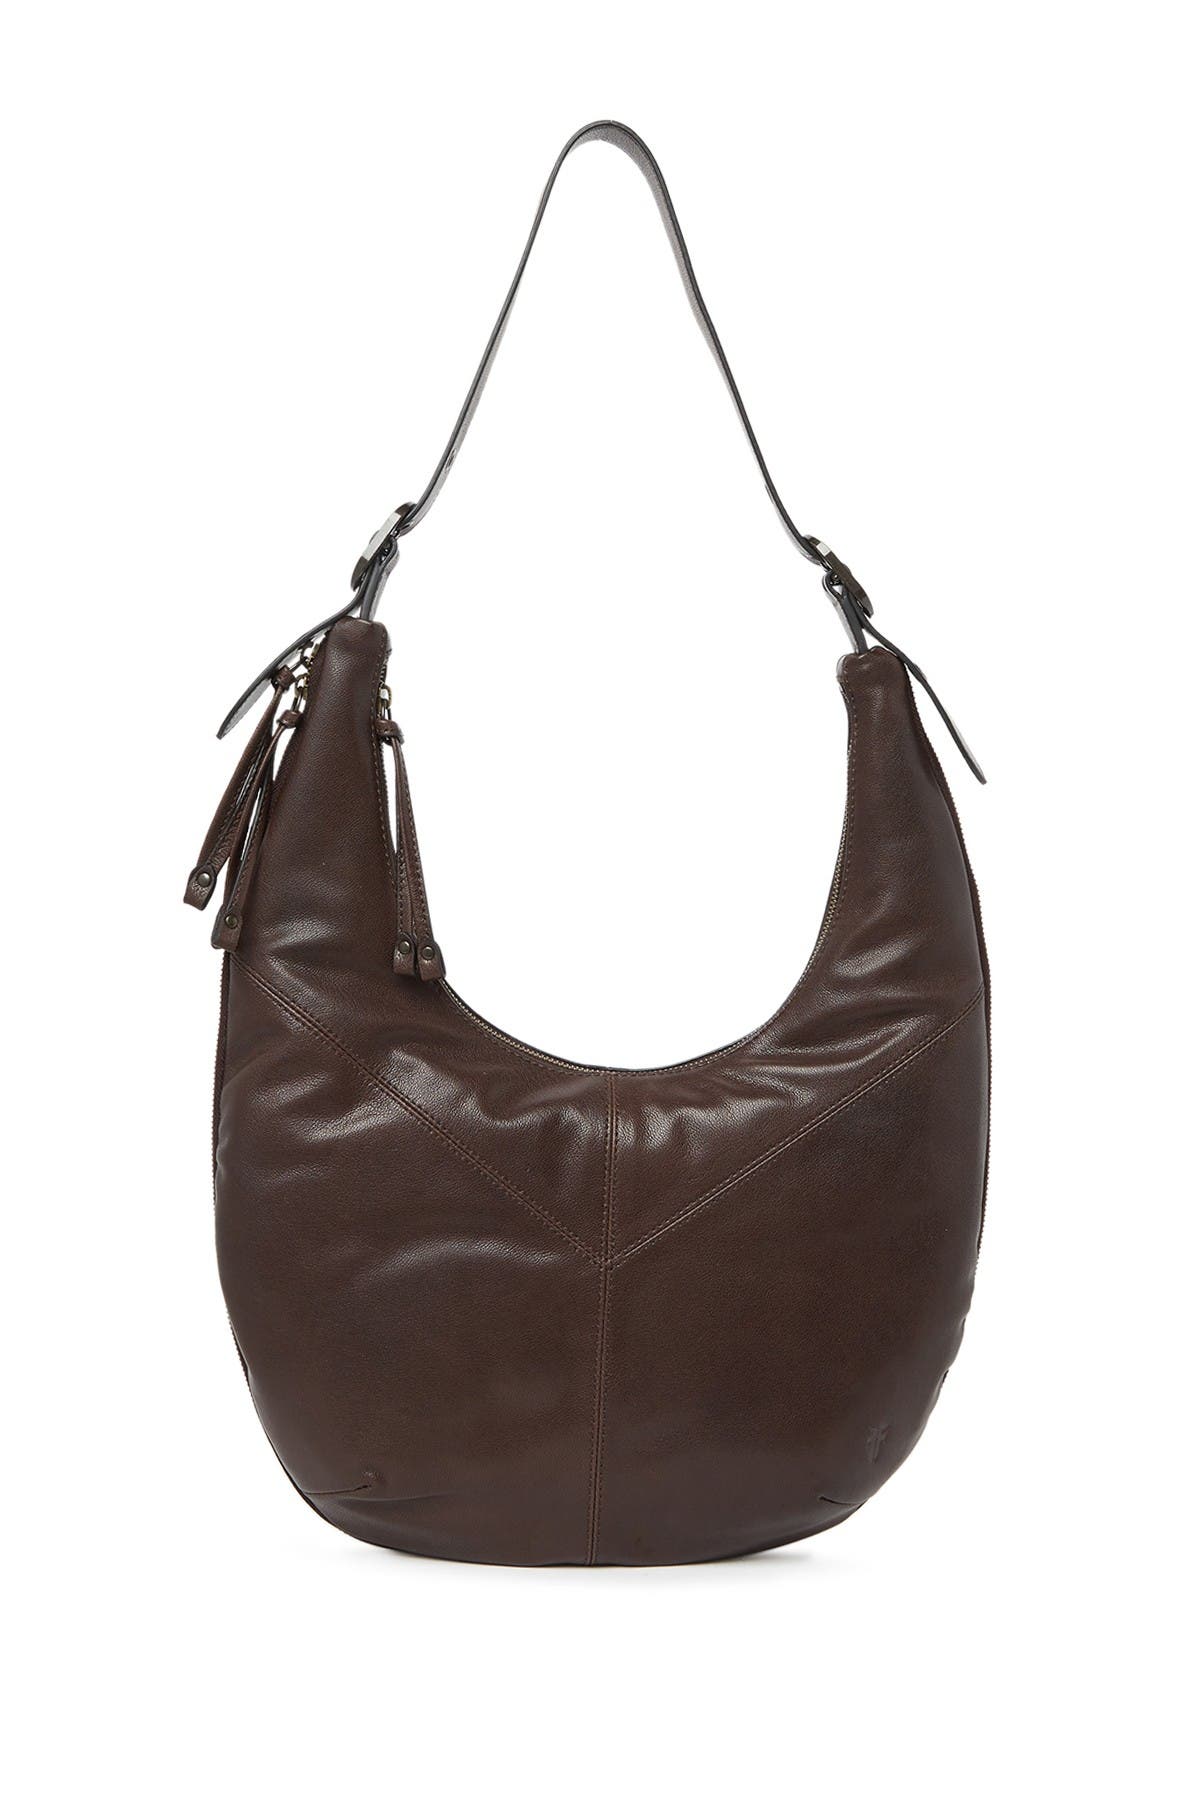 Frye Gina Leather Hobo Bag In Dark Brown